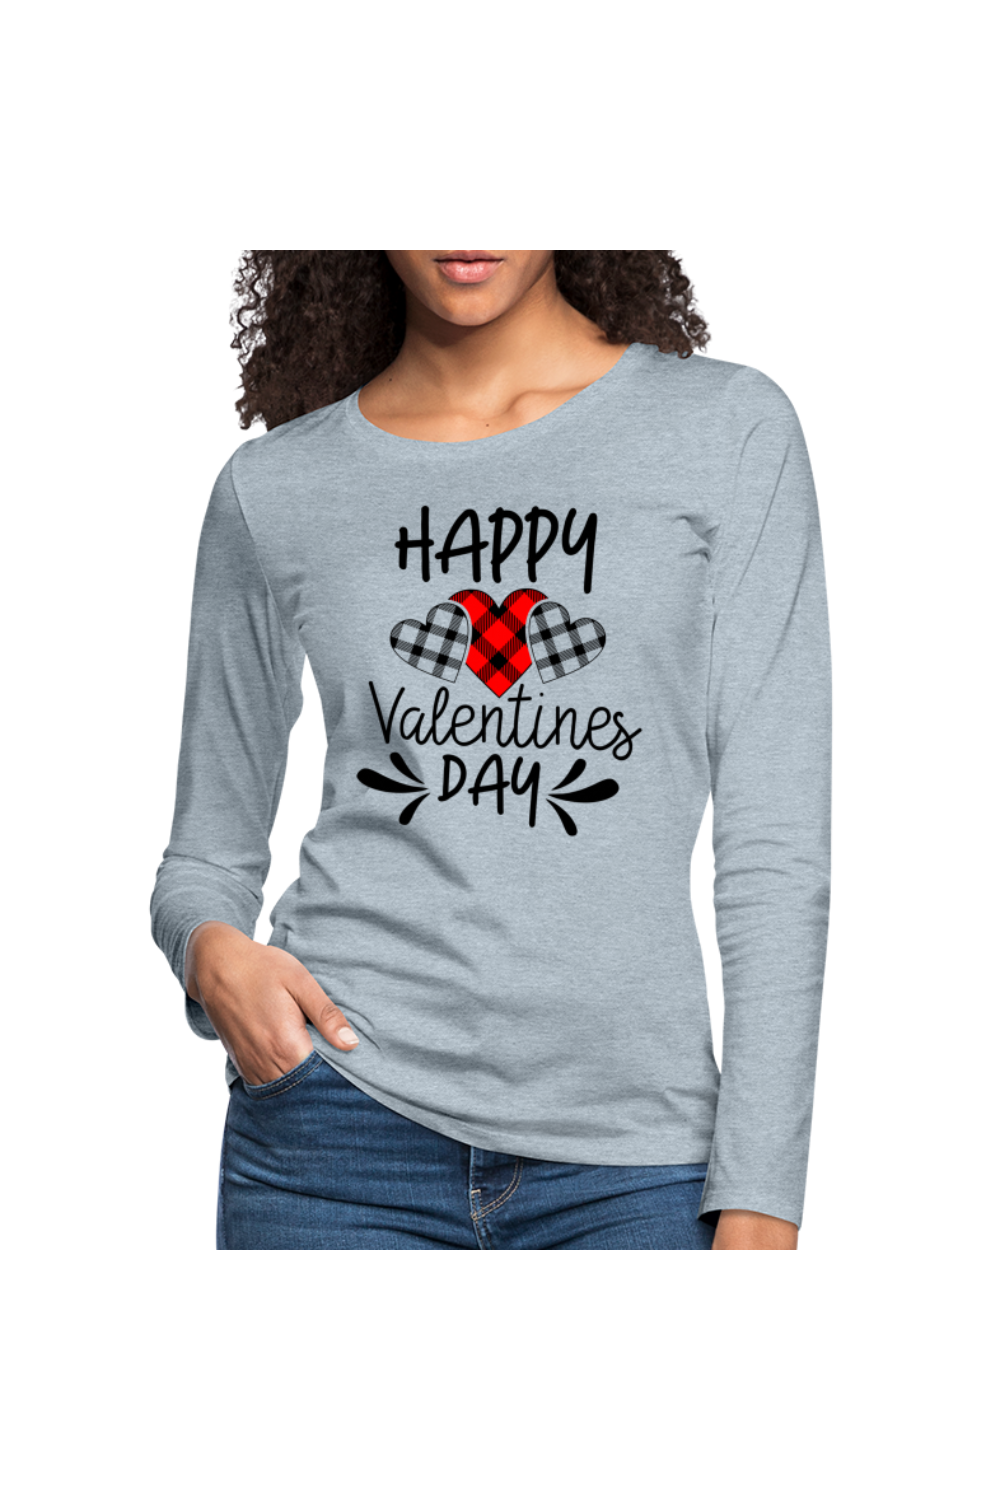 Women's Happy Valentine's Day Long Sleeve T-Shirt - heather ice blue - NicholesGifts.online